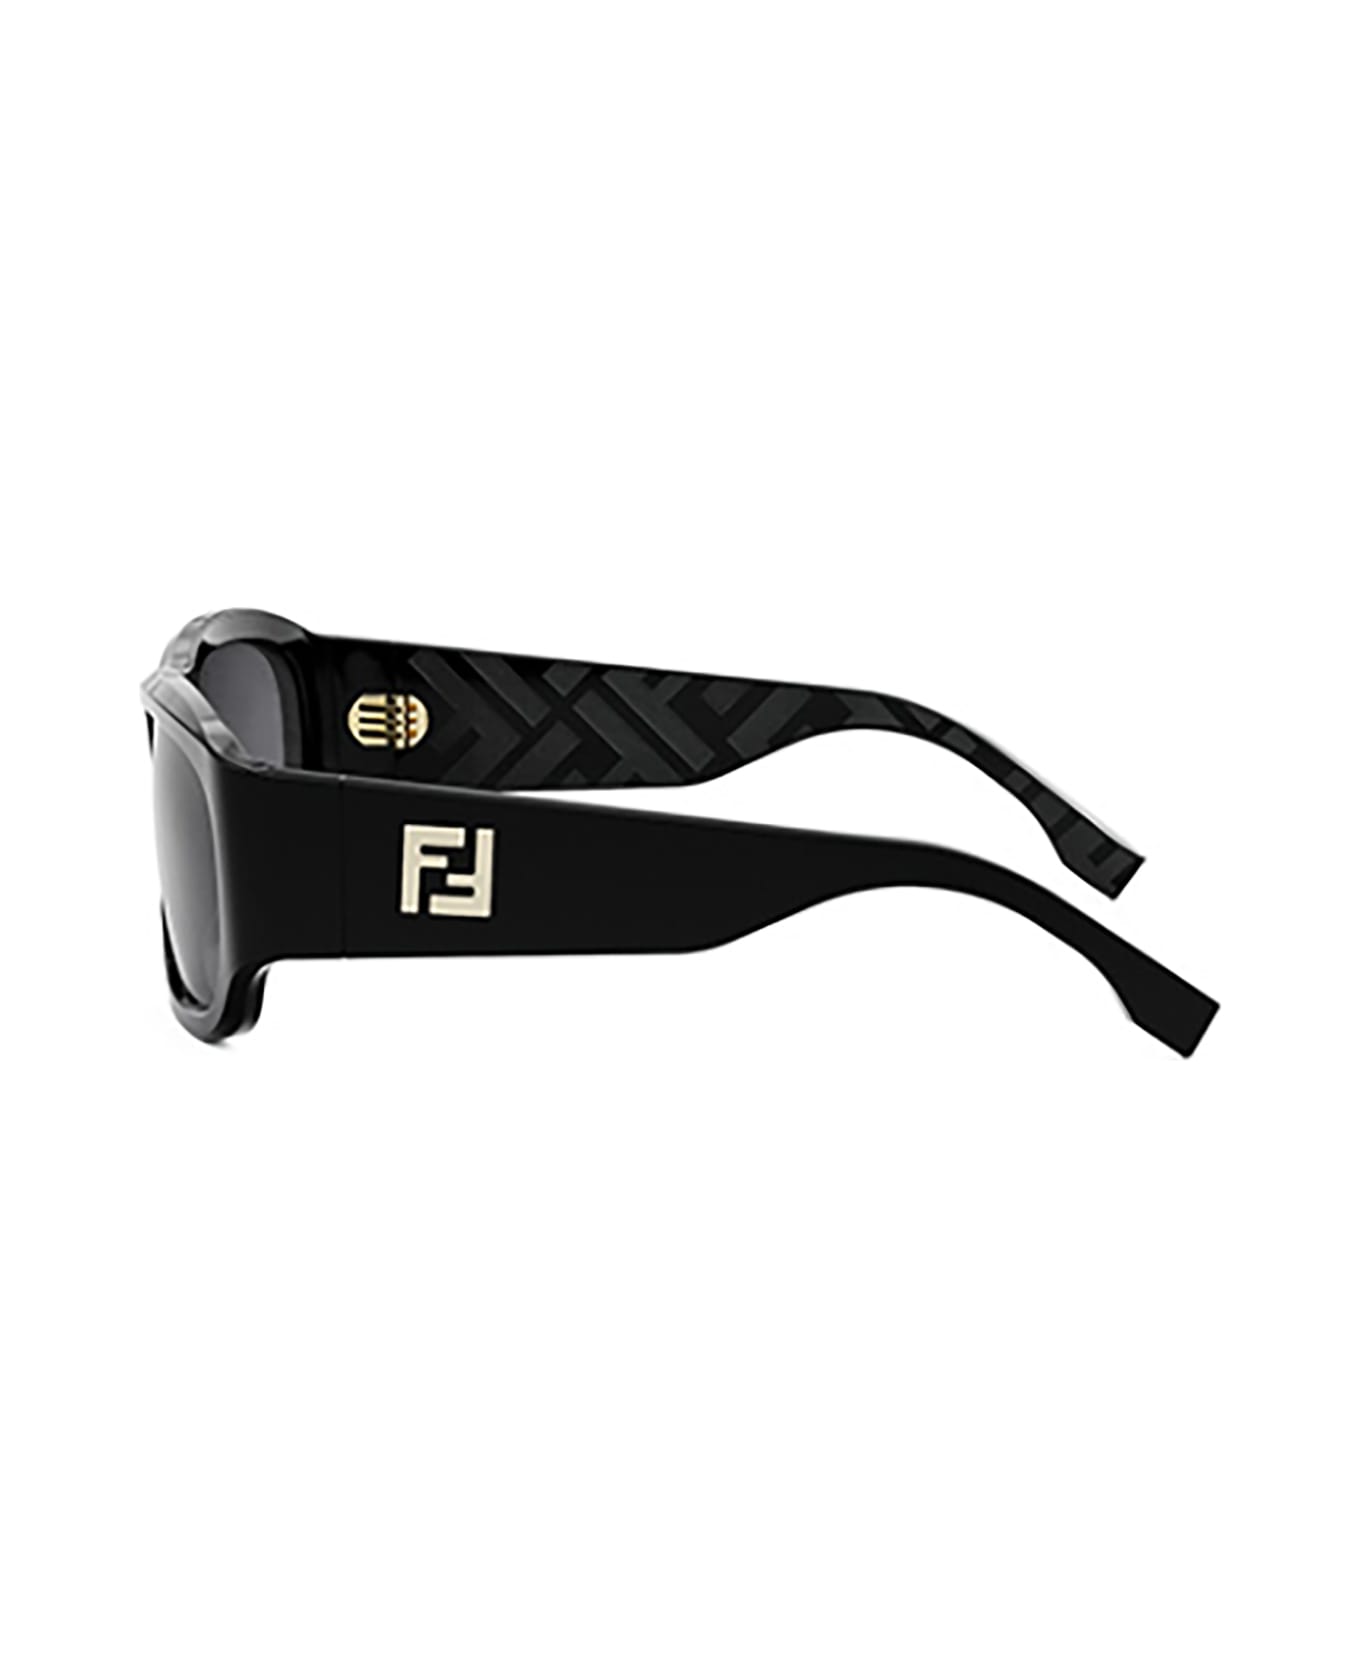 Fendi Eyewear FE40117I Sunglasses - A サングラス